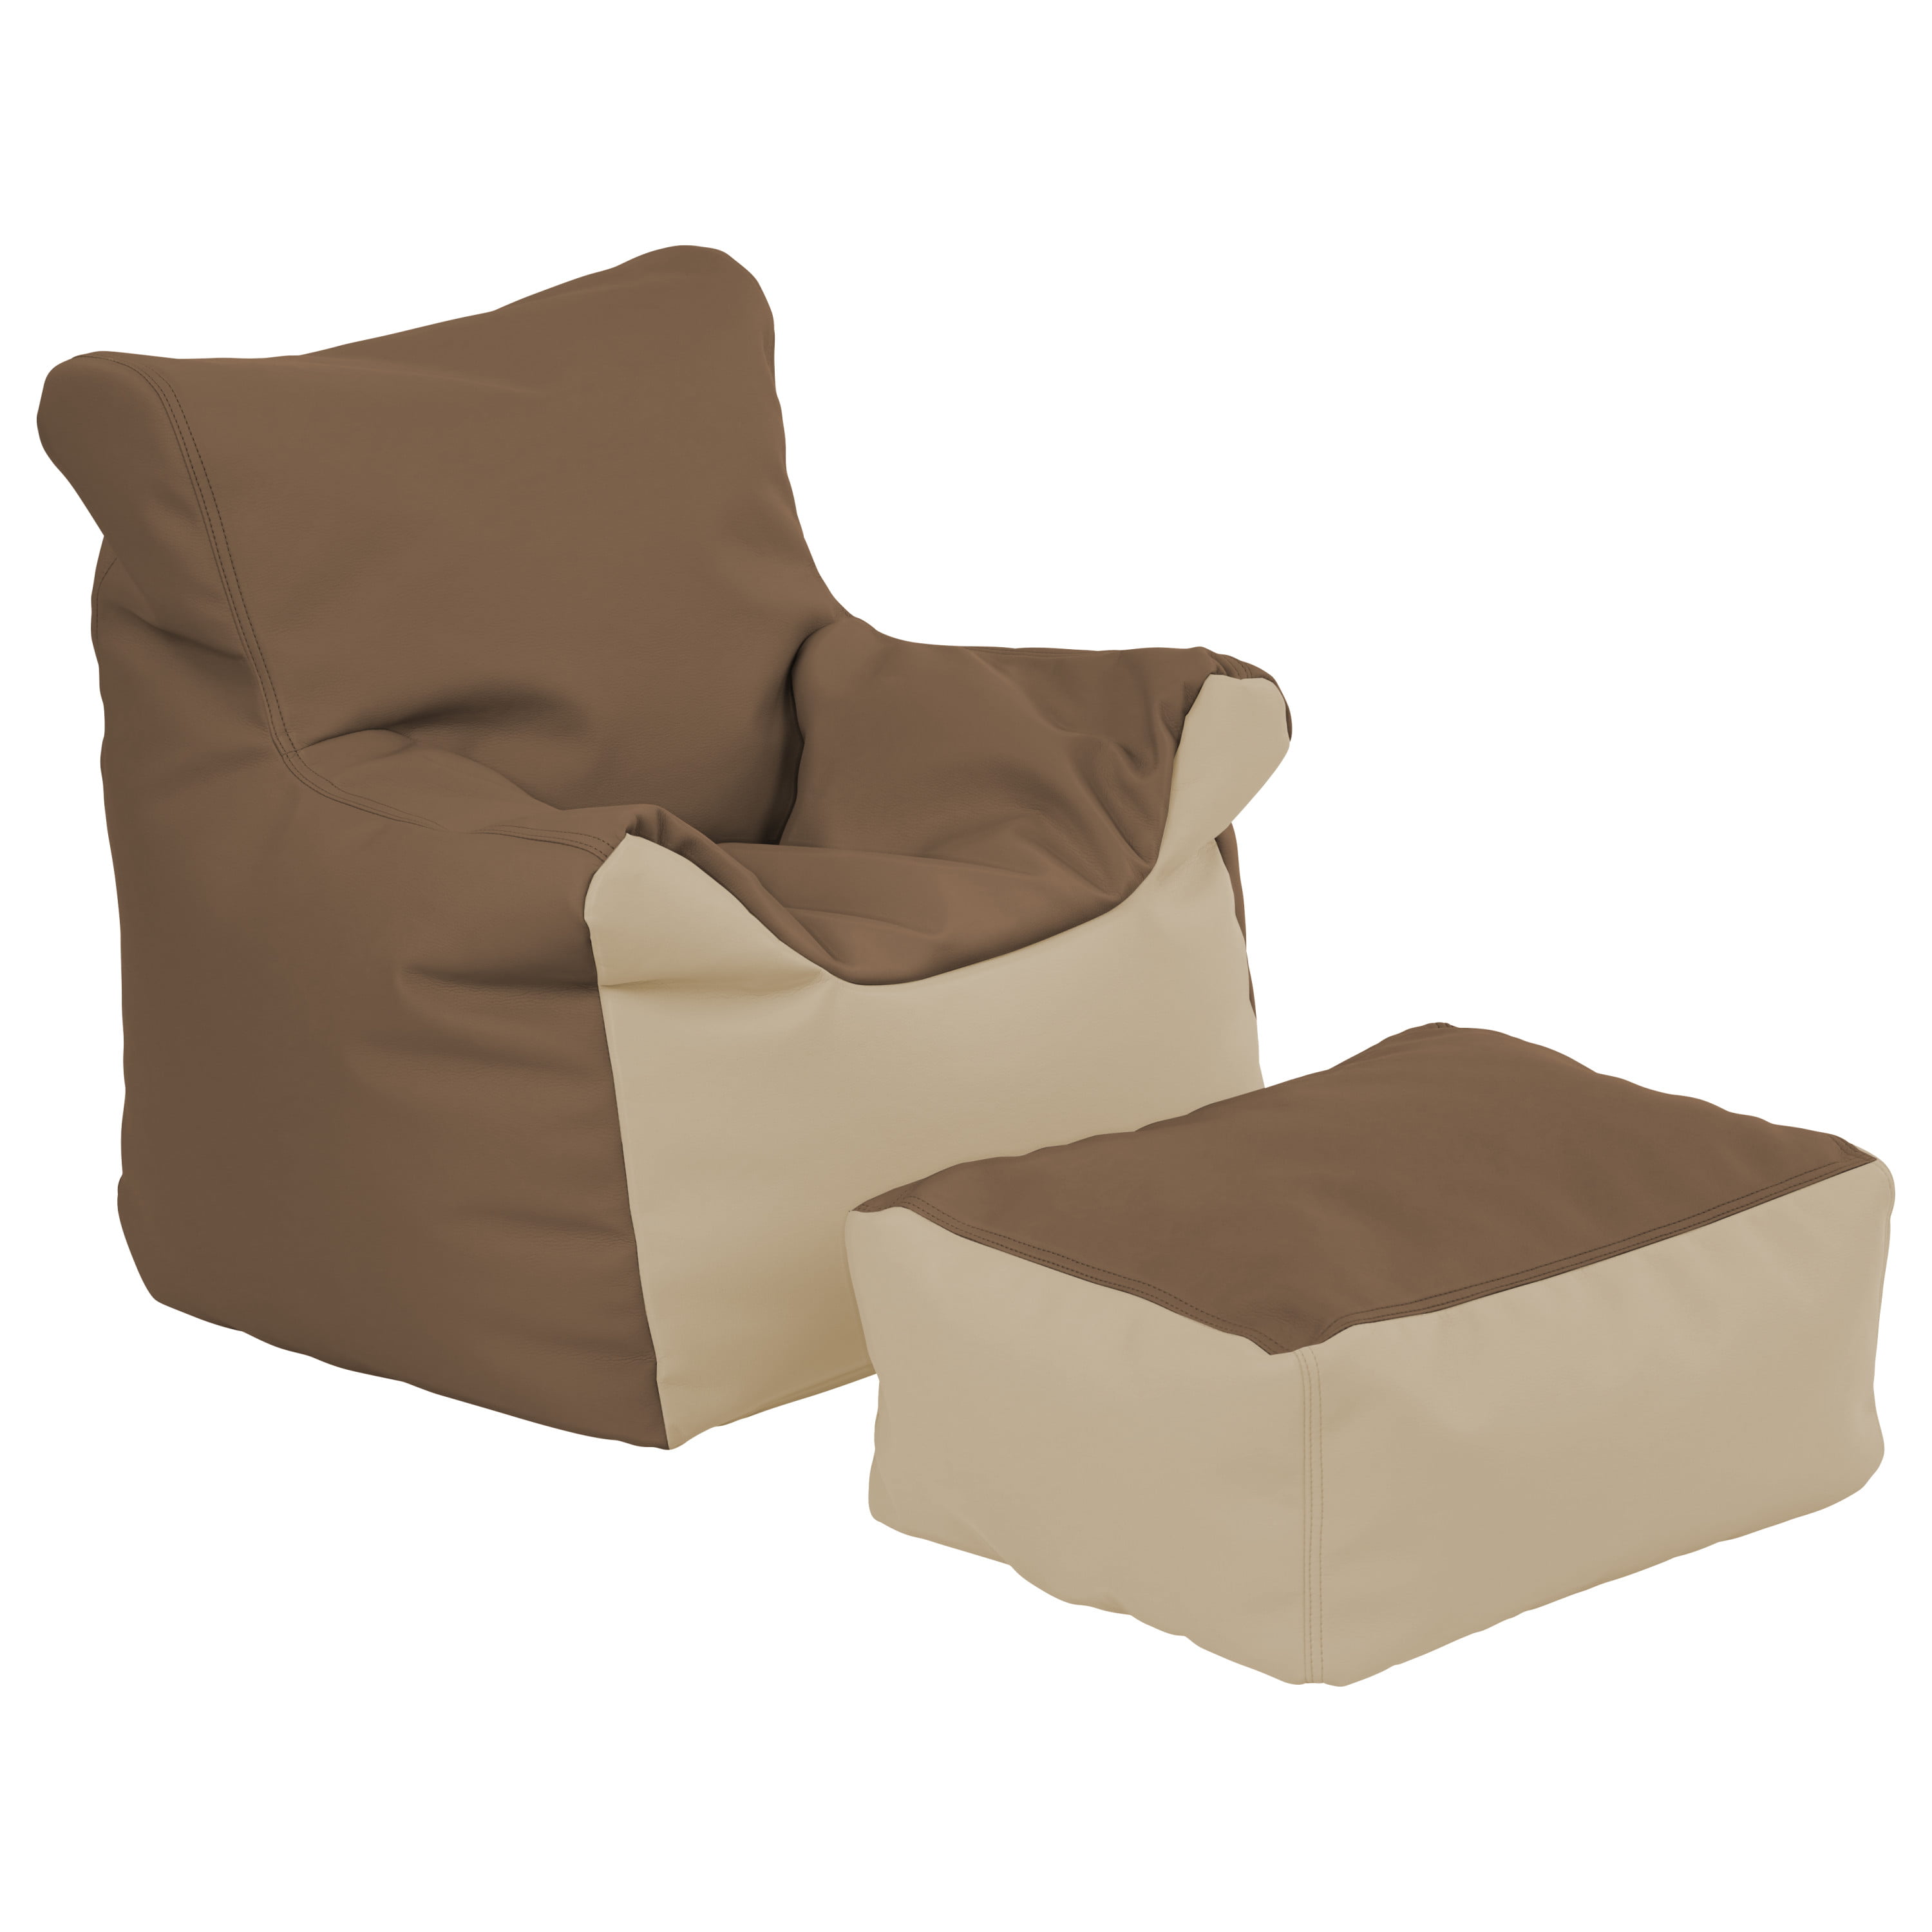 Chocolate and Sand ECR4Kids SoftZone Toddler Bean Bag Soft Seat 